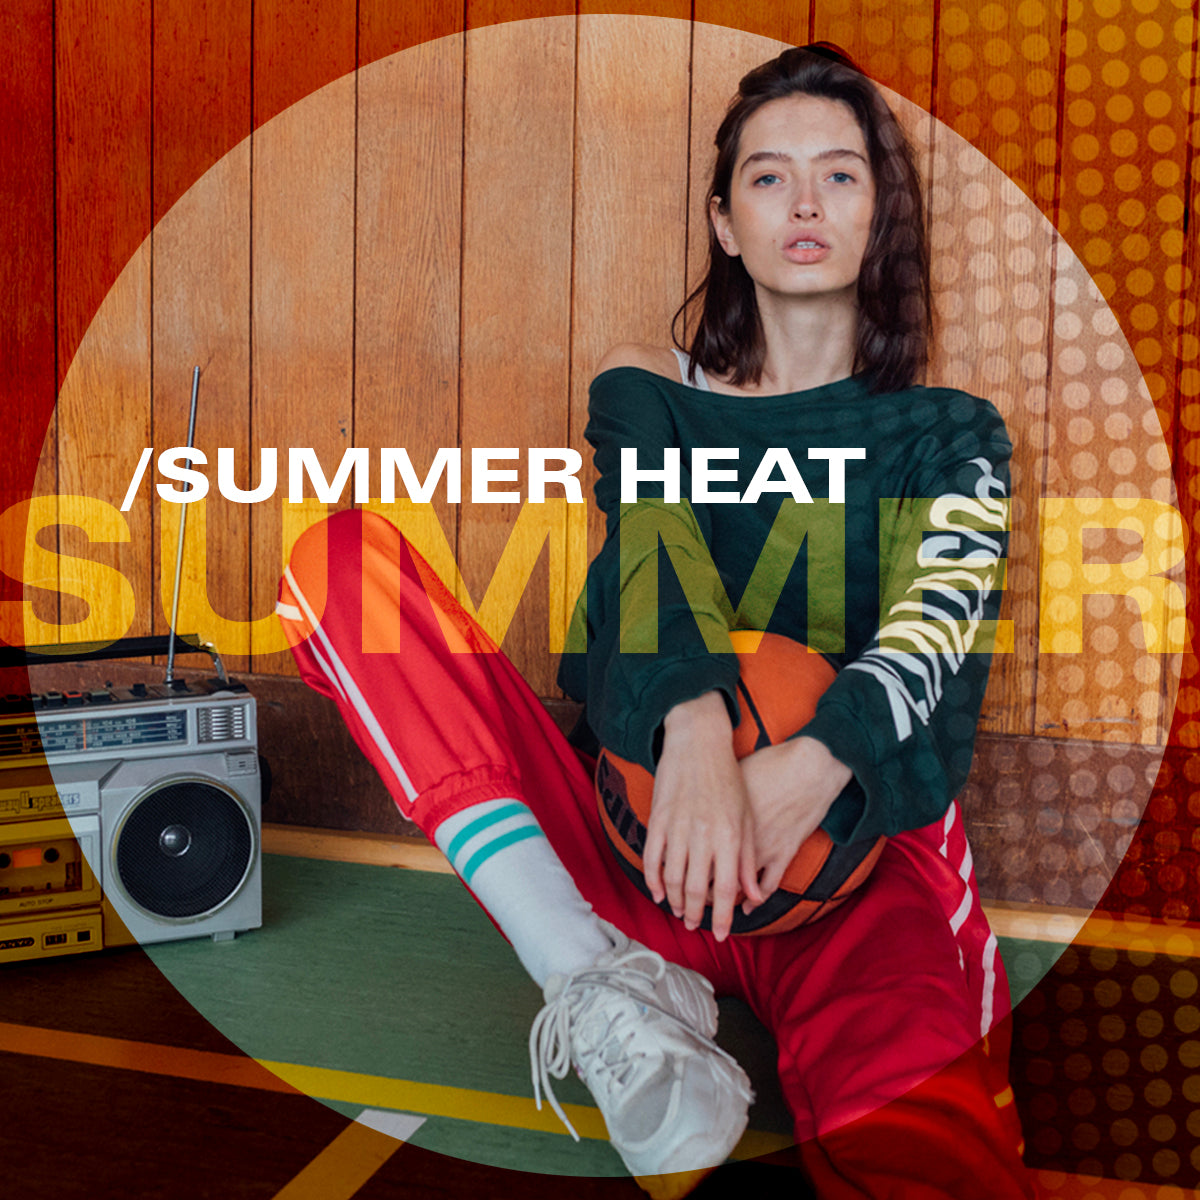 The Summer Heat 22 Edit